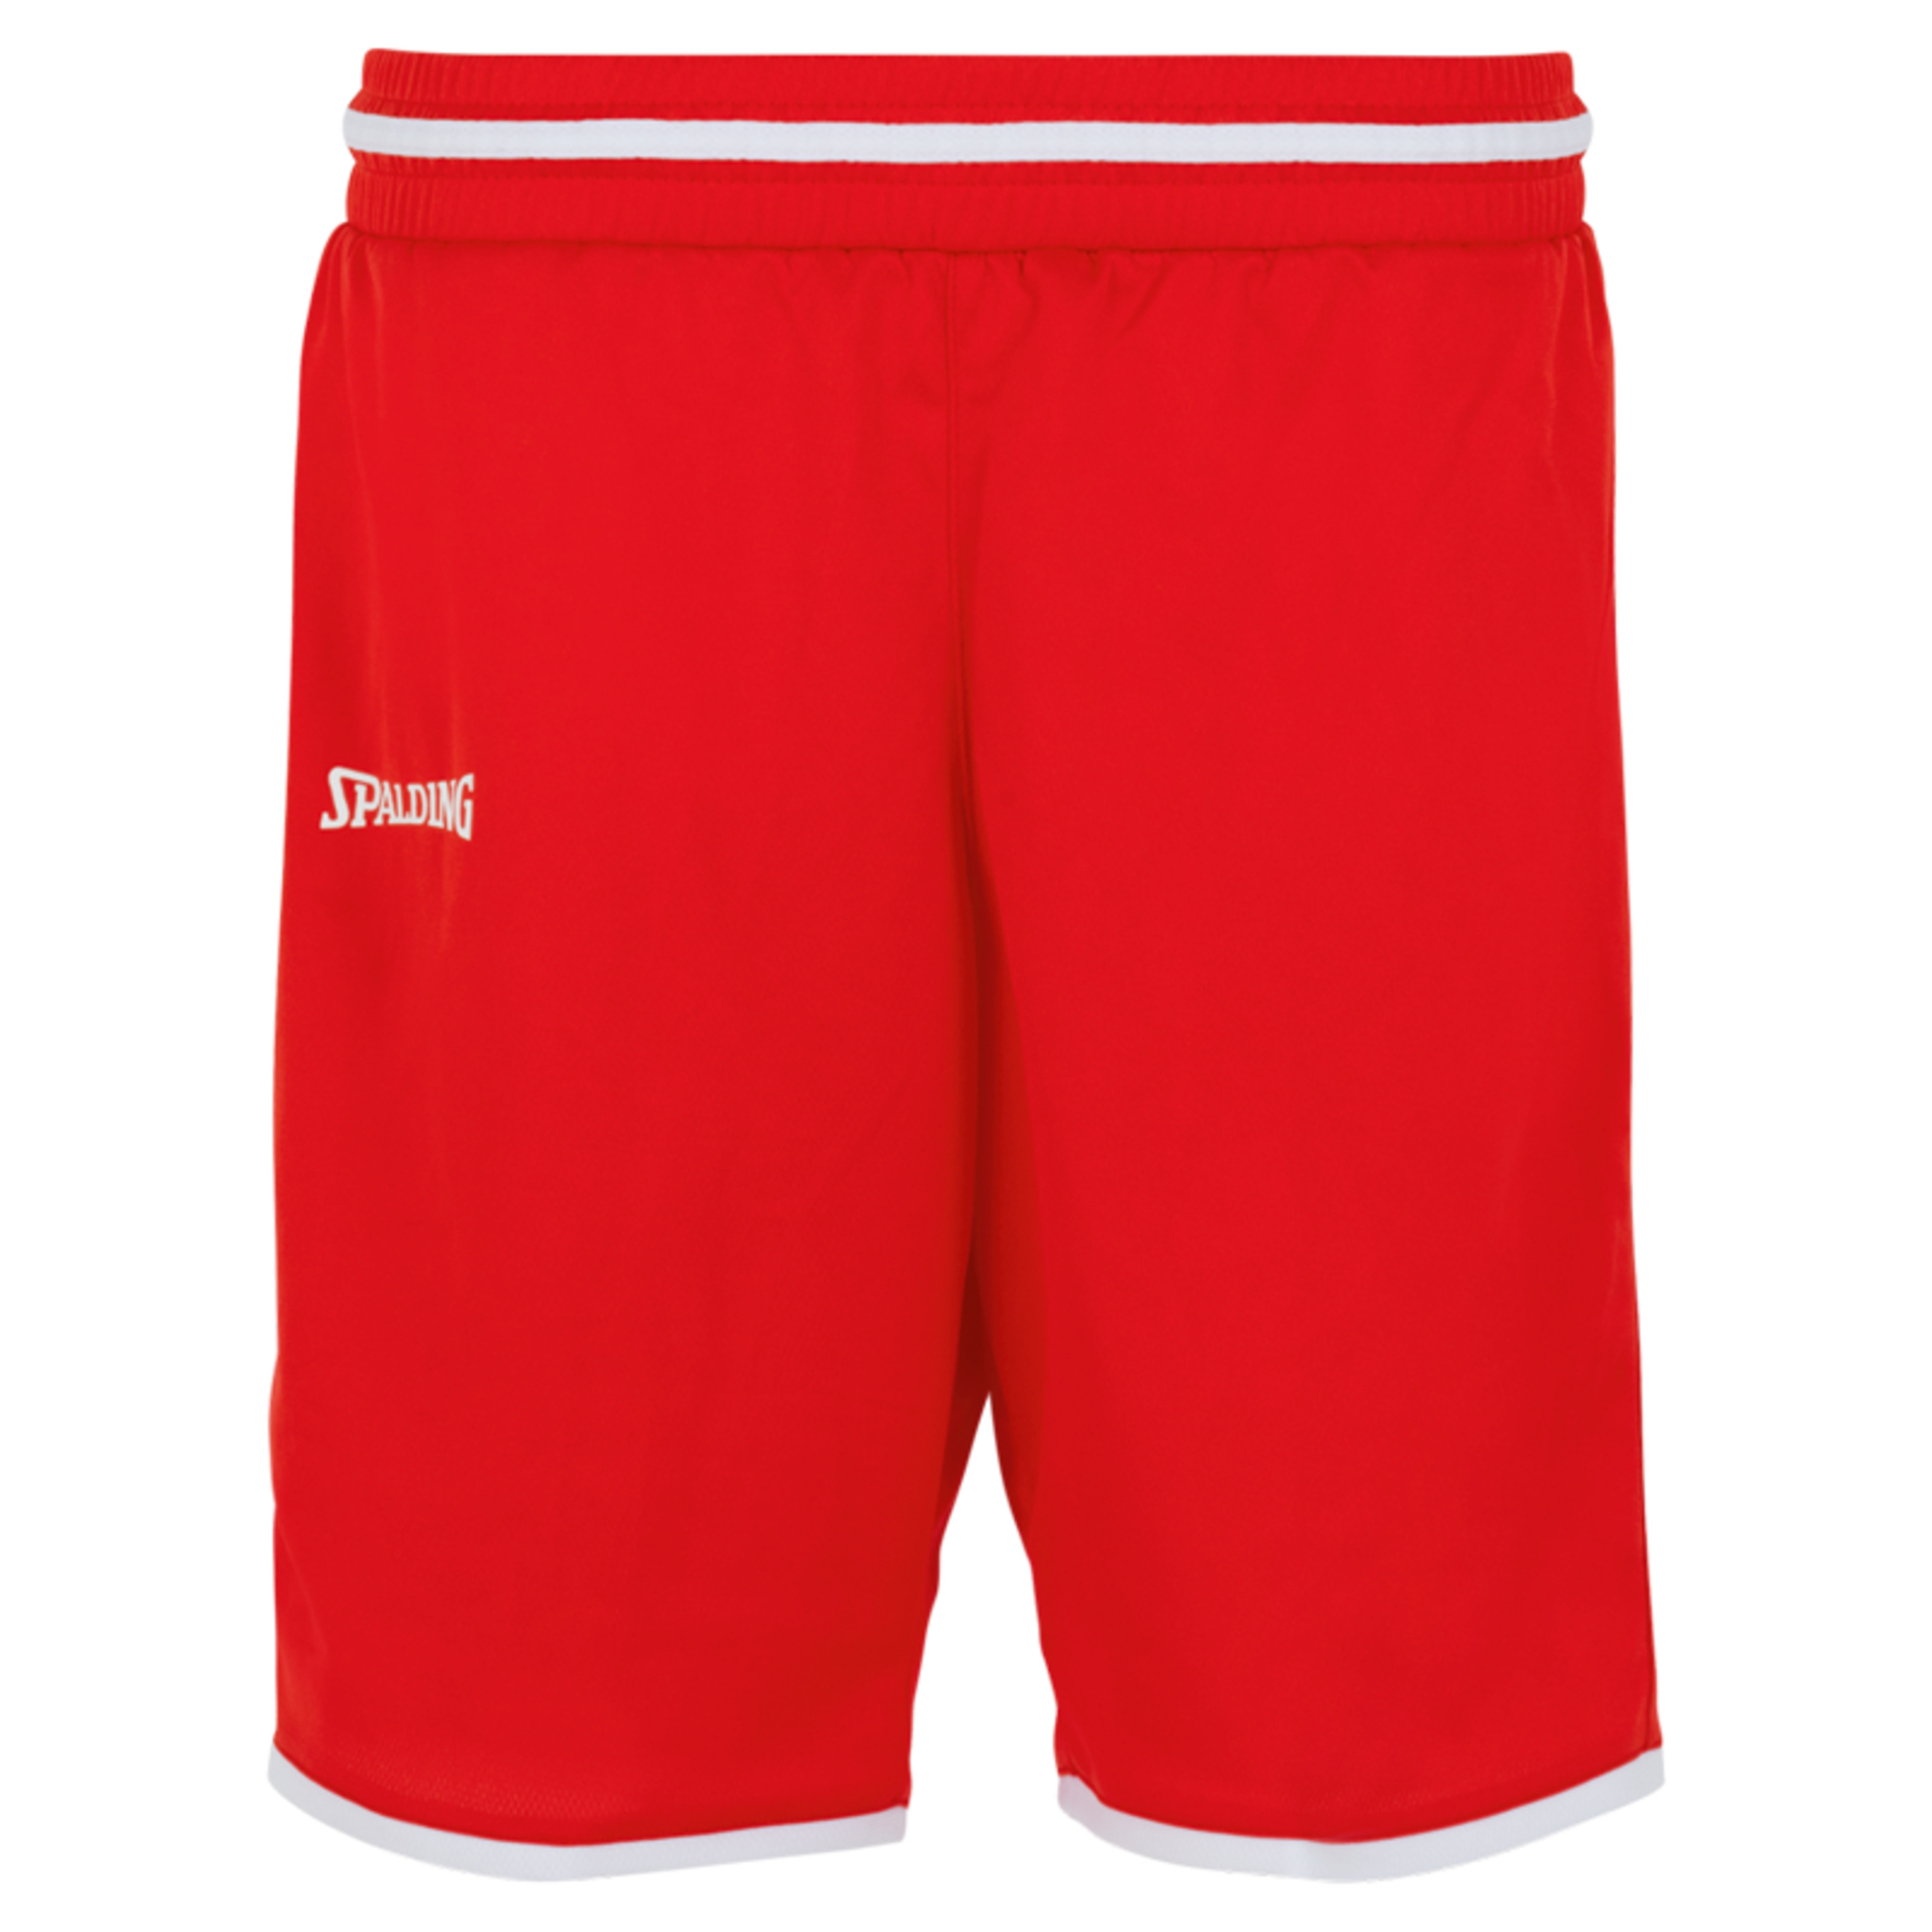 Move Shorts Women Rojo/blanco Spalding - rojo - 